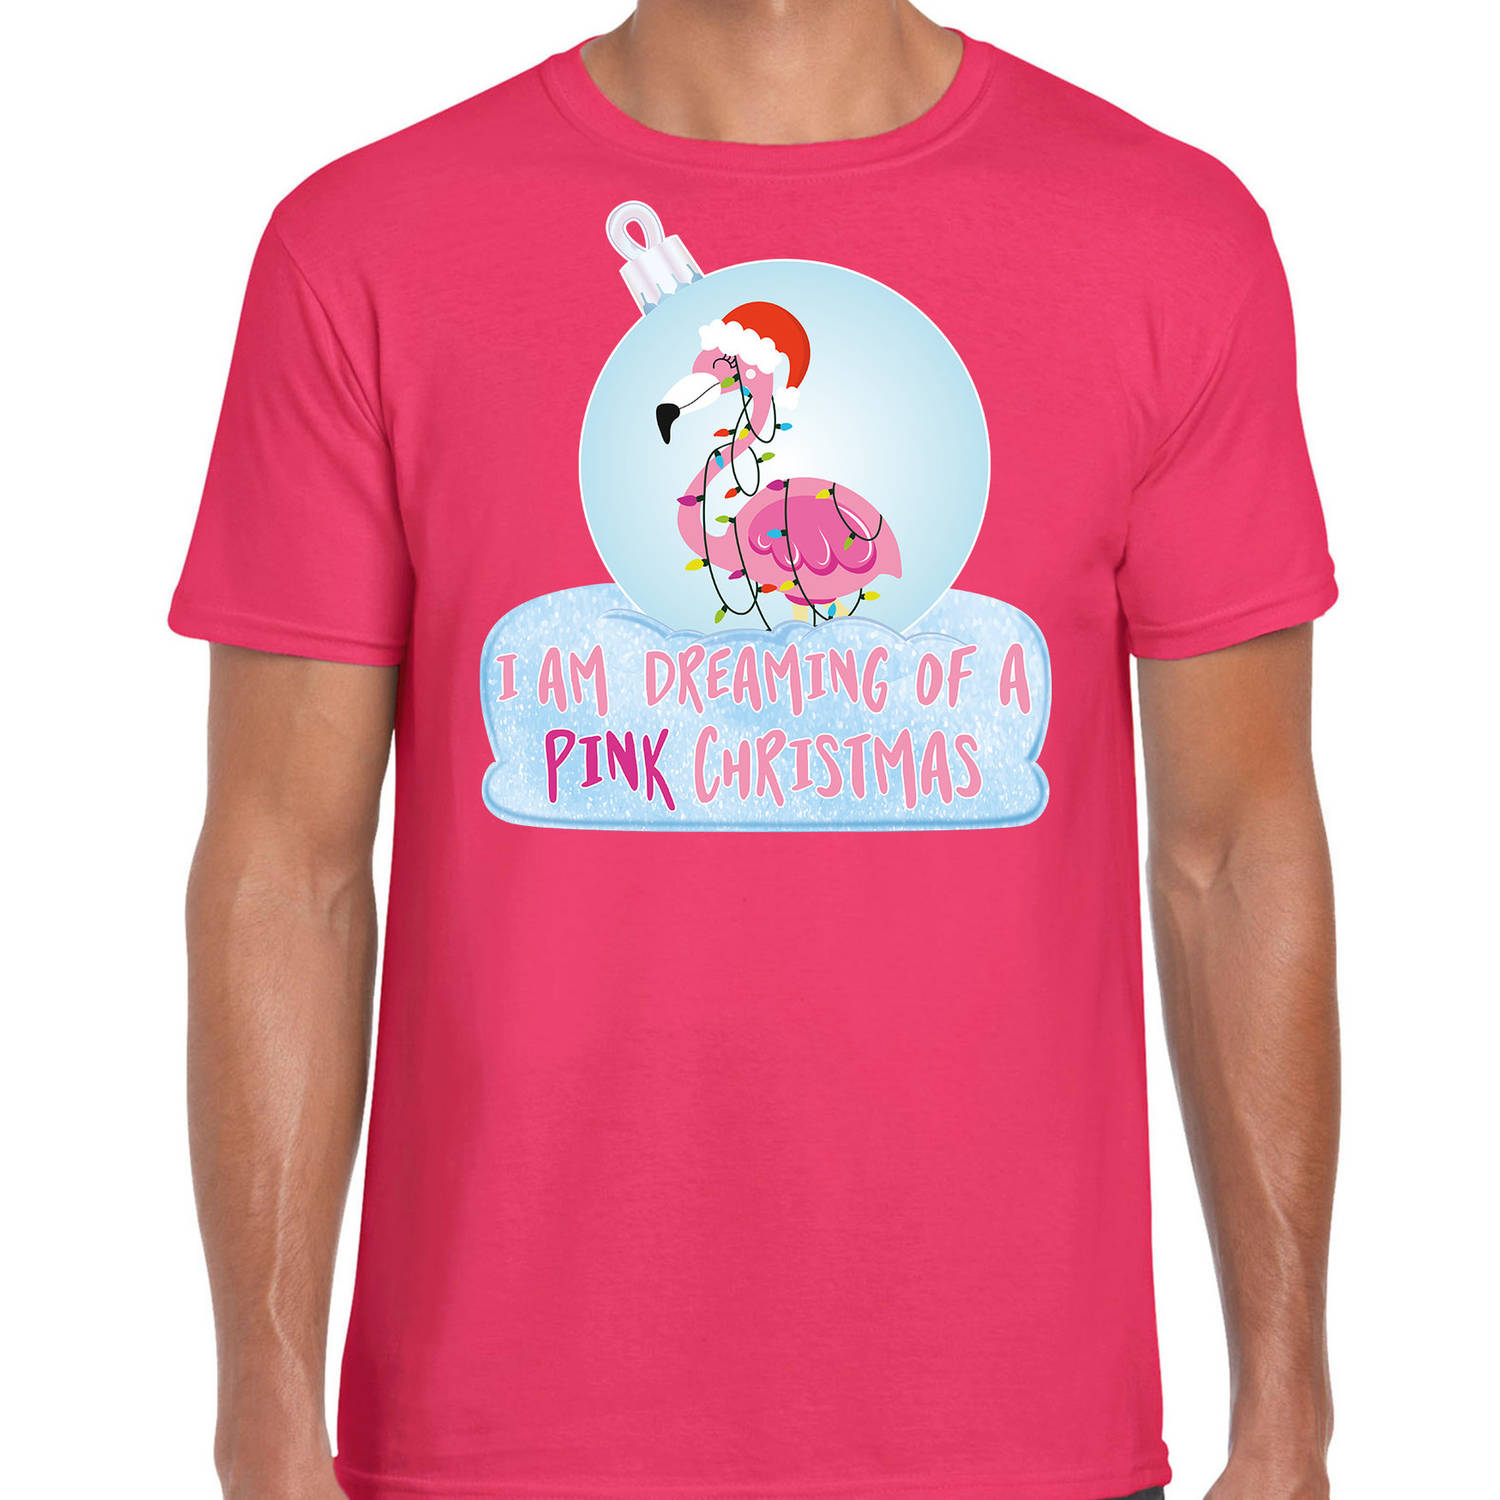 Roze Kerstshirt / Kerstkleding I am dreaming of a pink Christmas voor heren met flamingo kerstbal L - kerst t-shirts